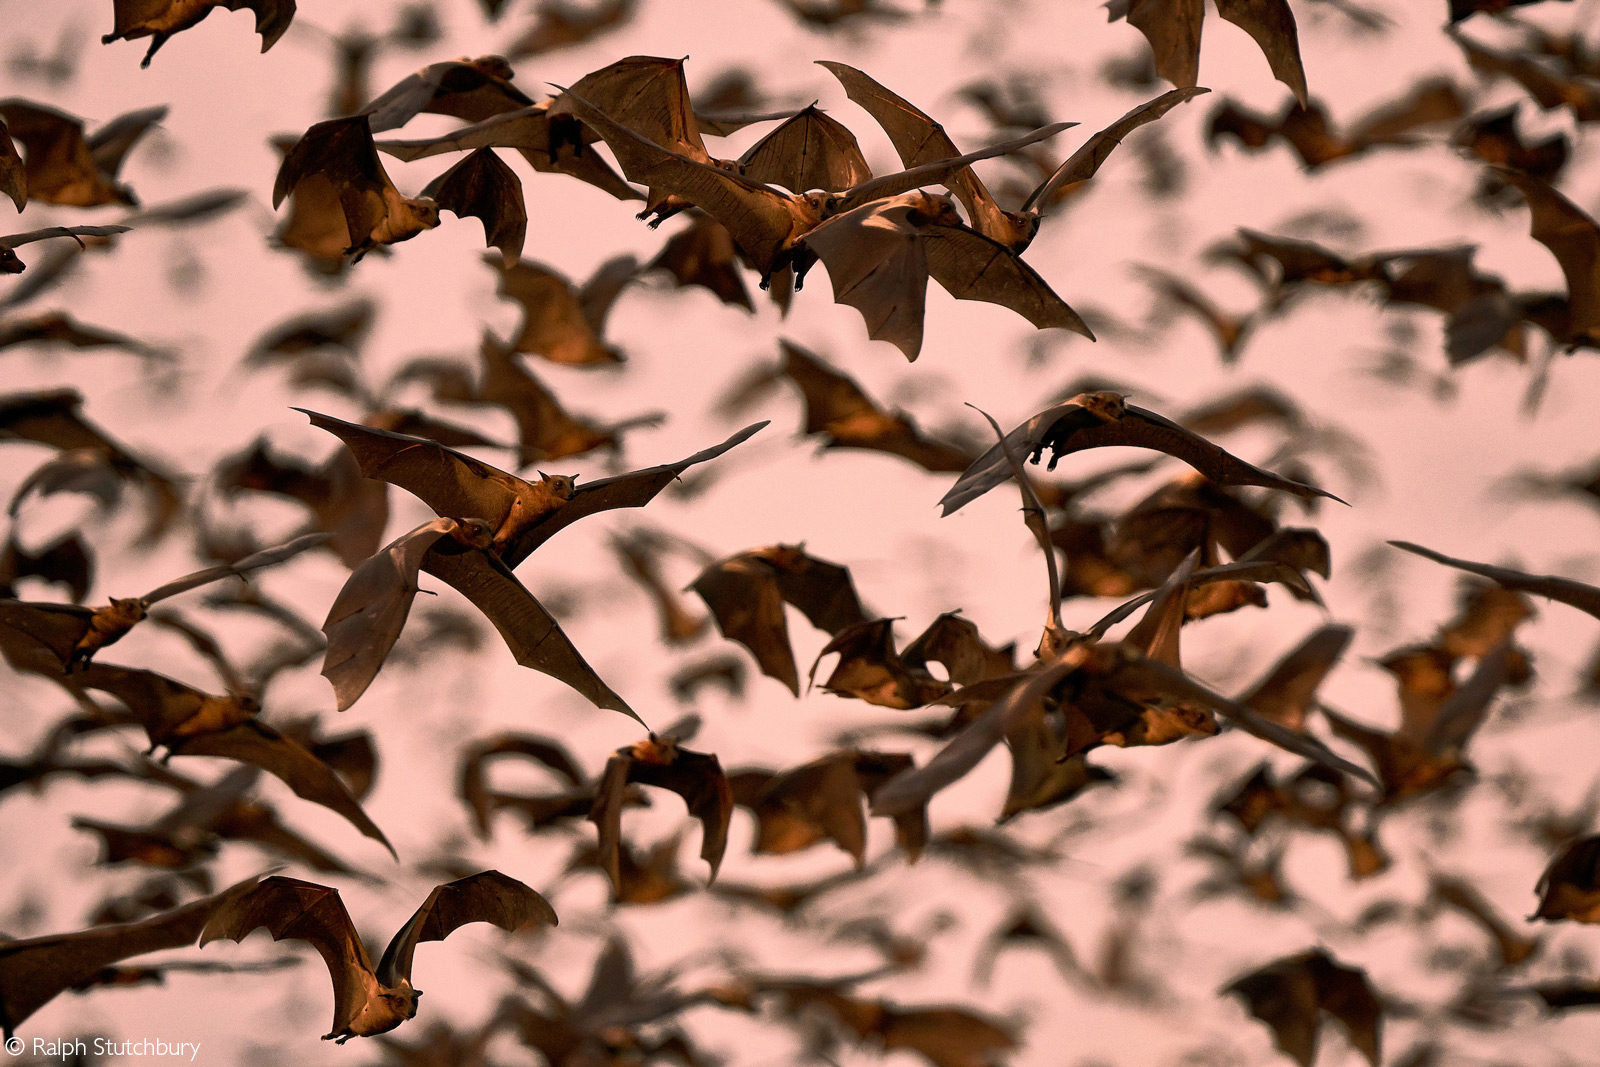 Straw-coloured fruit bats. Kasanka National Park, Zambia © Ralph Stutchbury